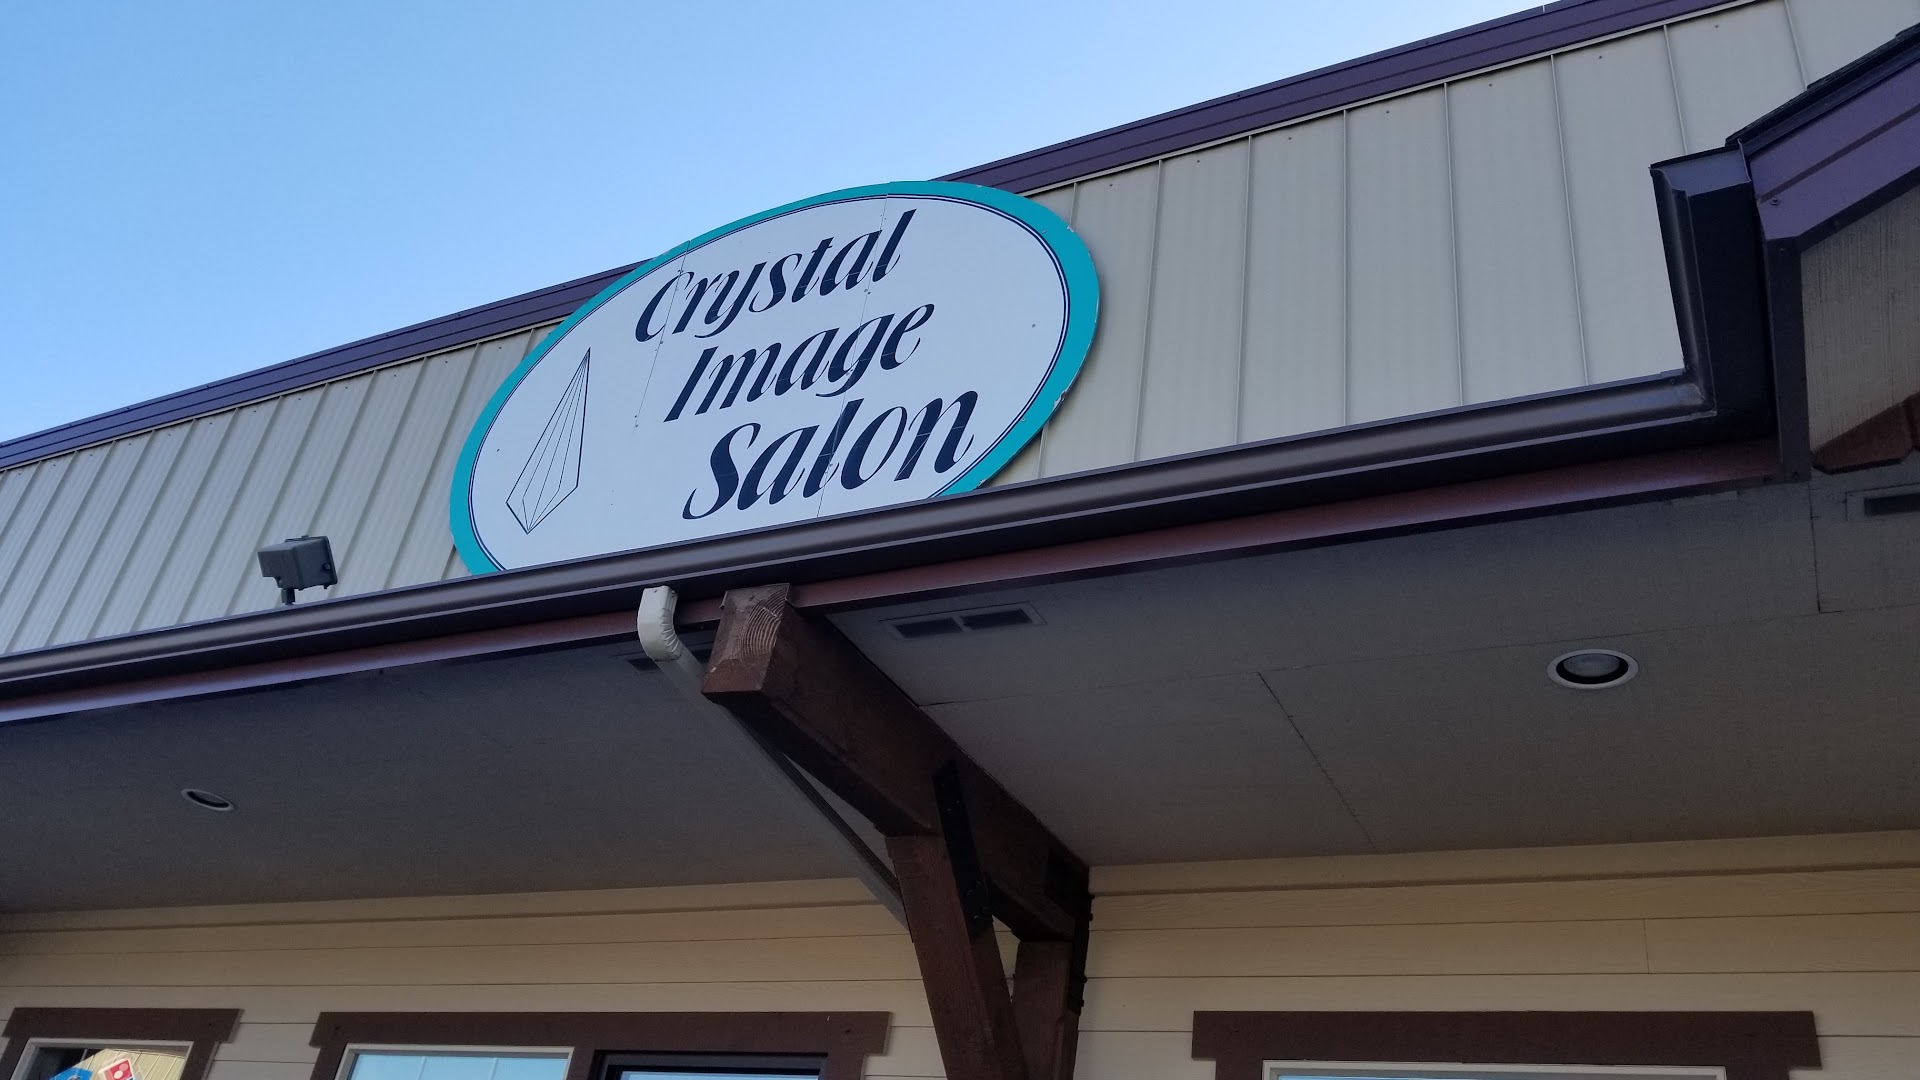 Crystal Image Salon